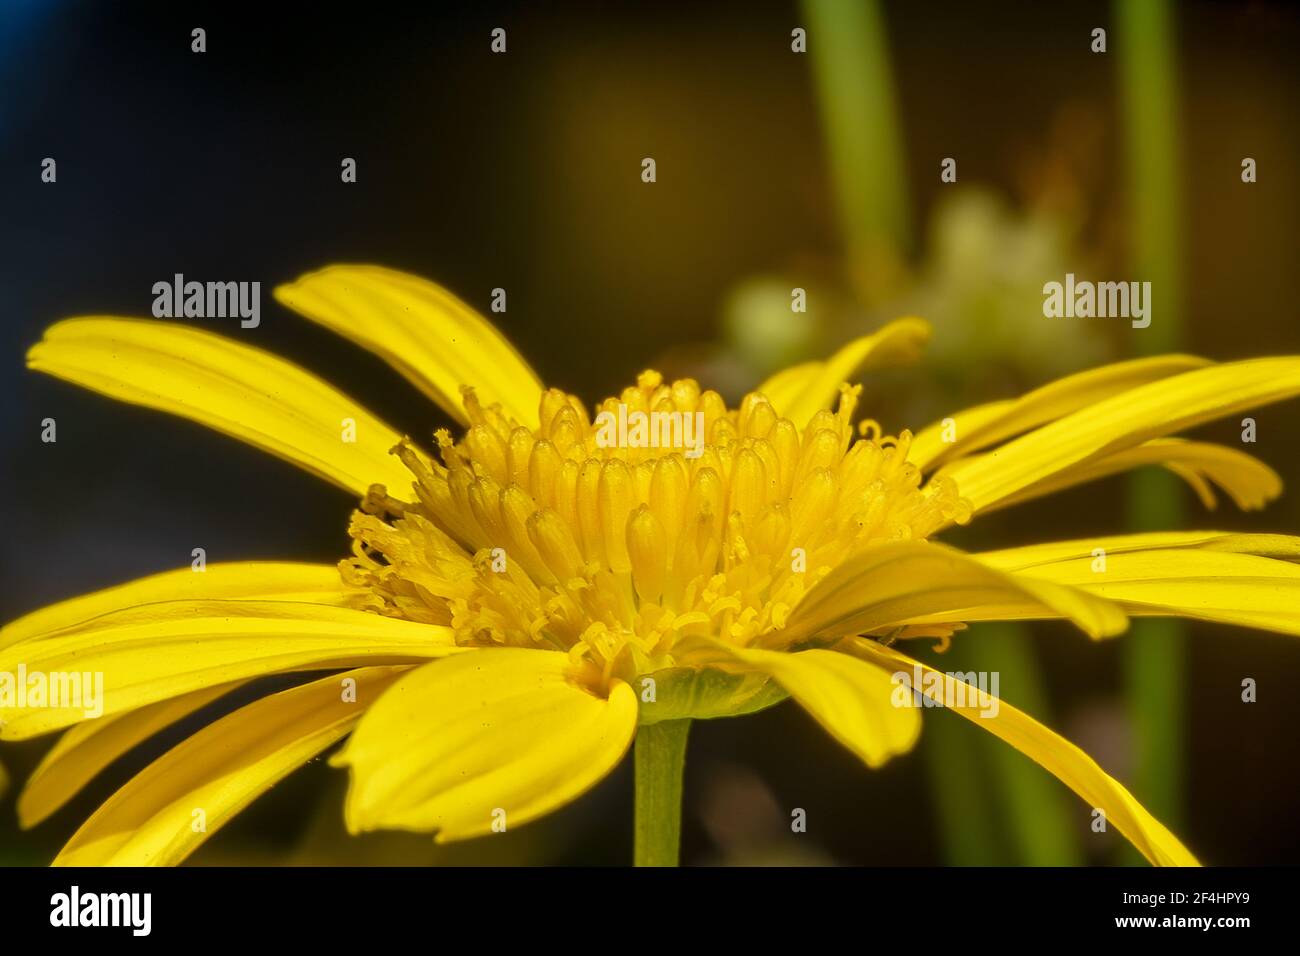 Close up shot of a Yellow gerbera daisy flower Stock Photo